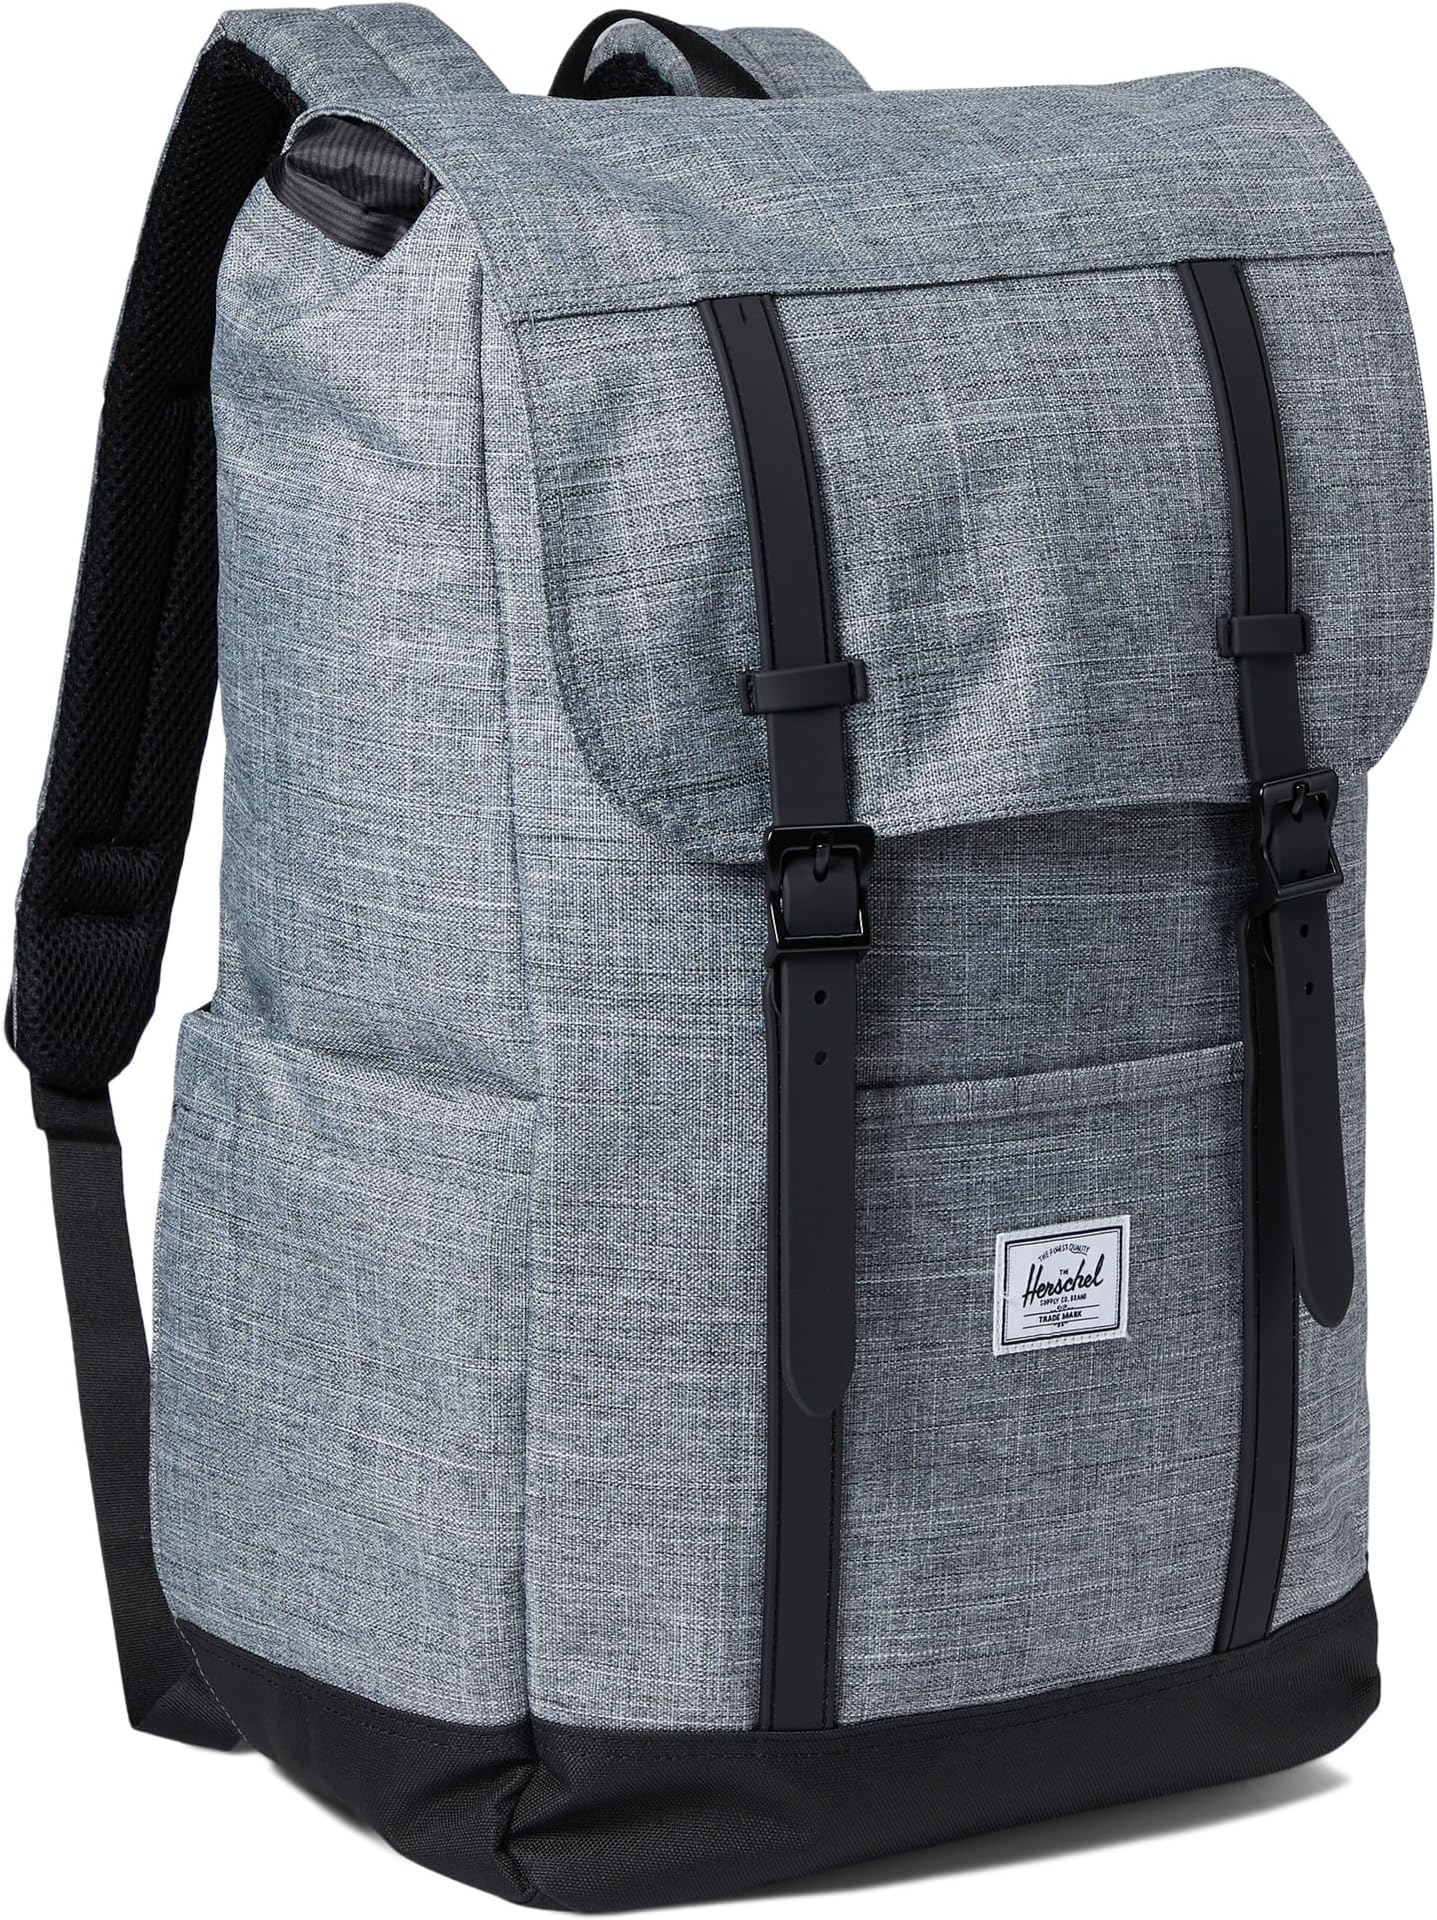 рюкзак retreat backpack herschel supply co цвет ivy green Рюкзак Retreat Backpack Herschel Supply Co., цвет Raven Crosshatch